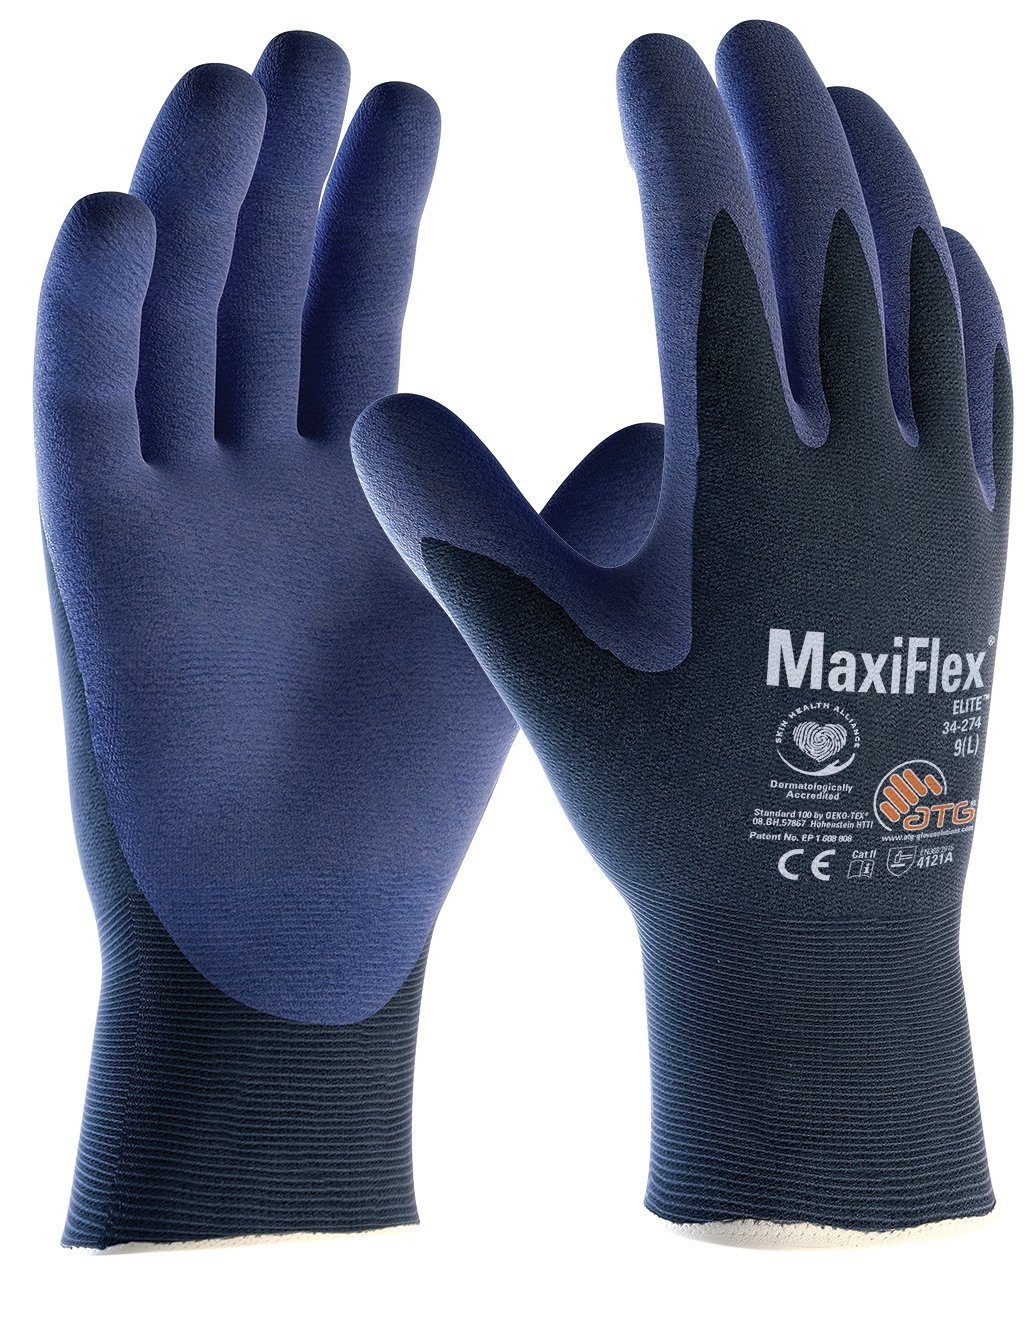 12 Elite™ MaxiFlex® ATG Paar Montage-Handschuhe